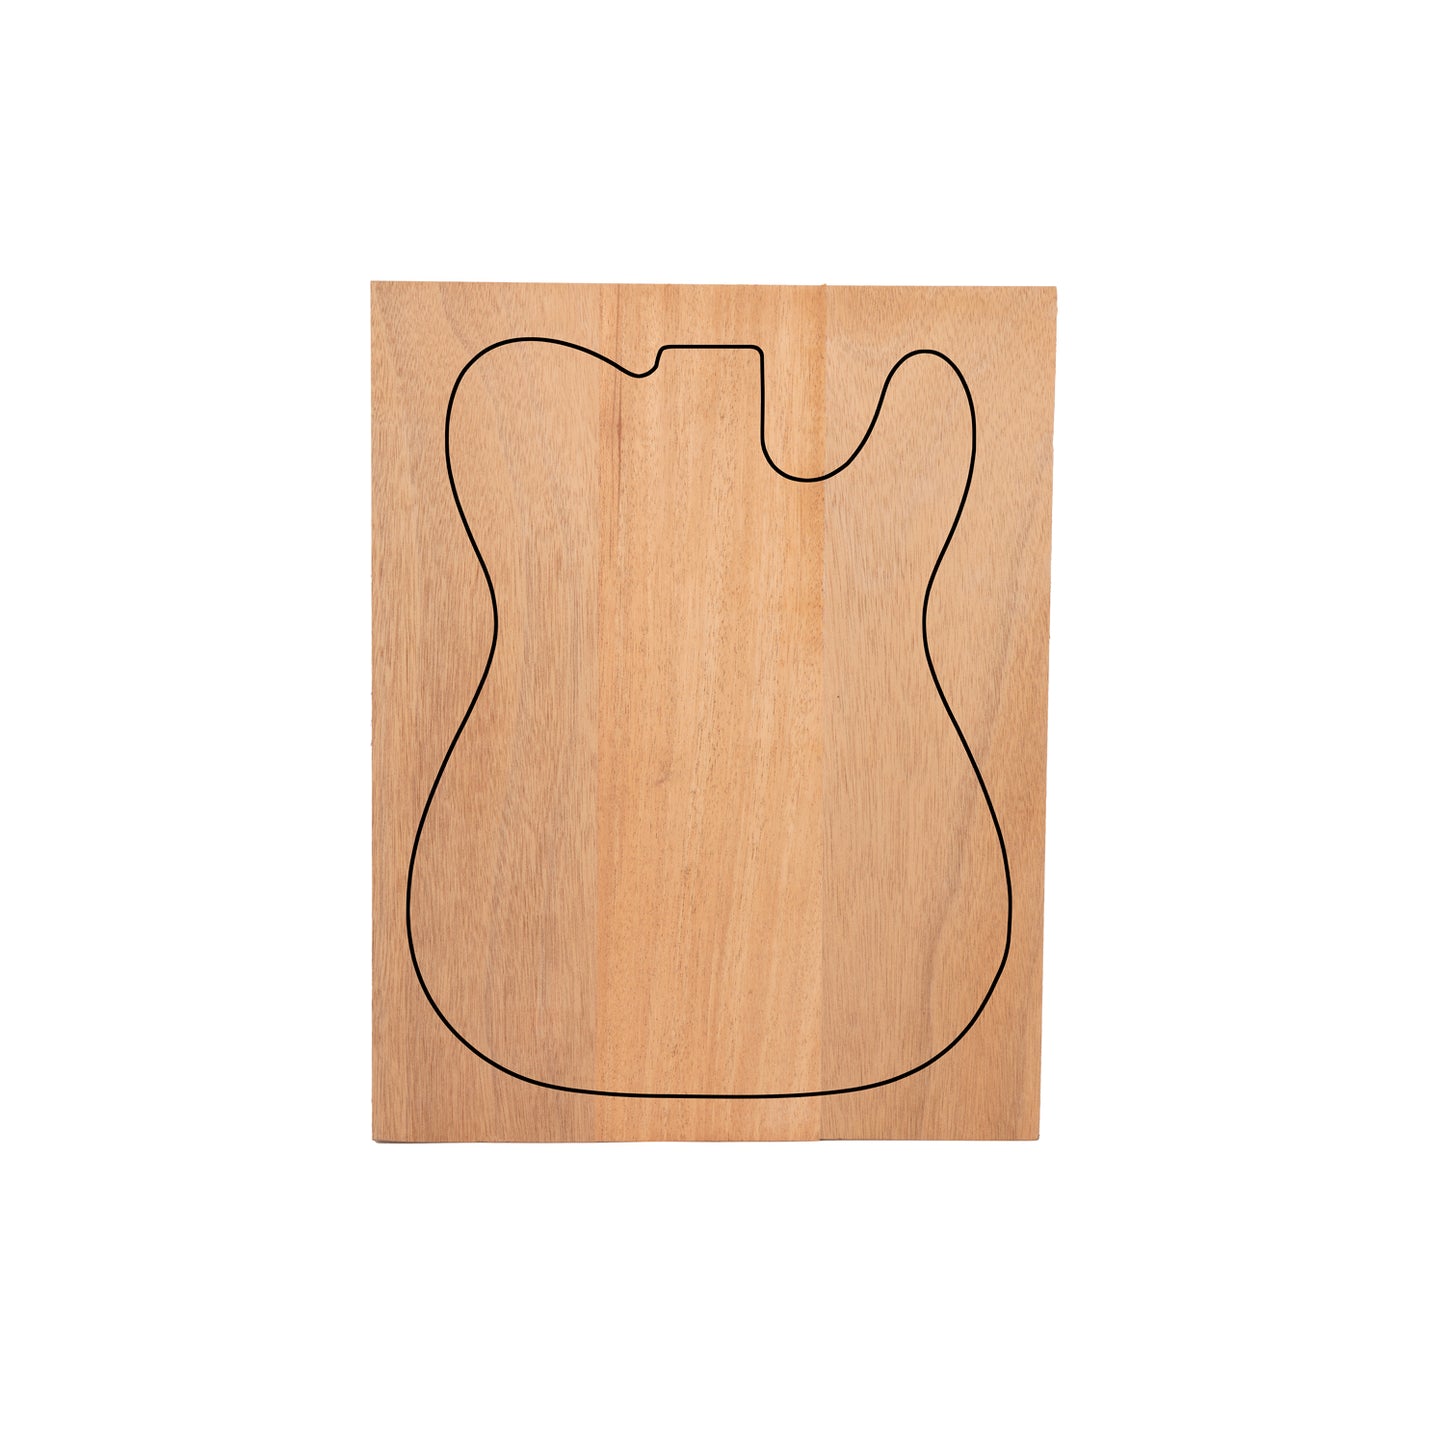 AE Guitars® Premium Mahogany Guitar Body Blank 3 Piece Glued Solid